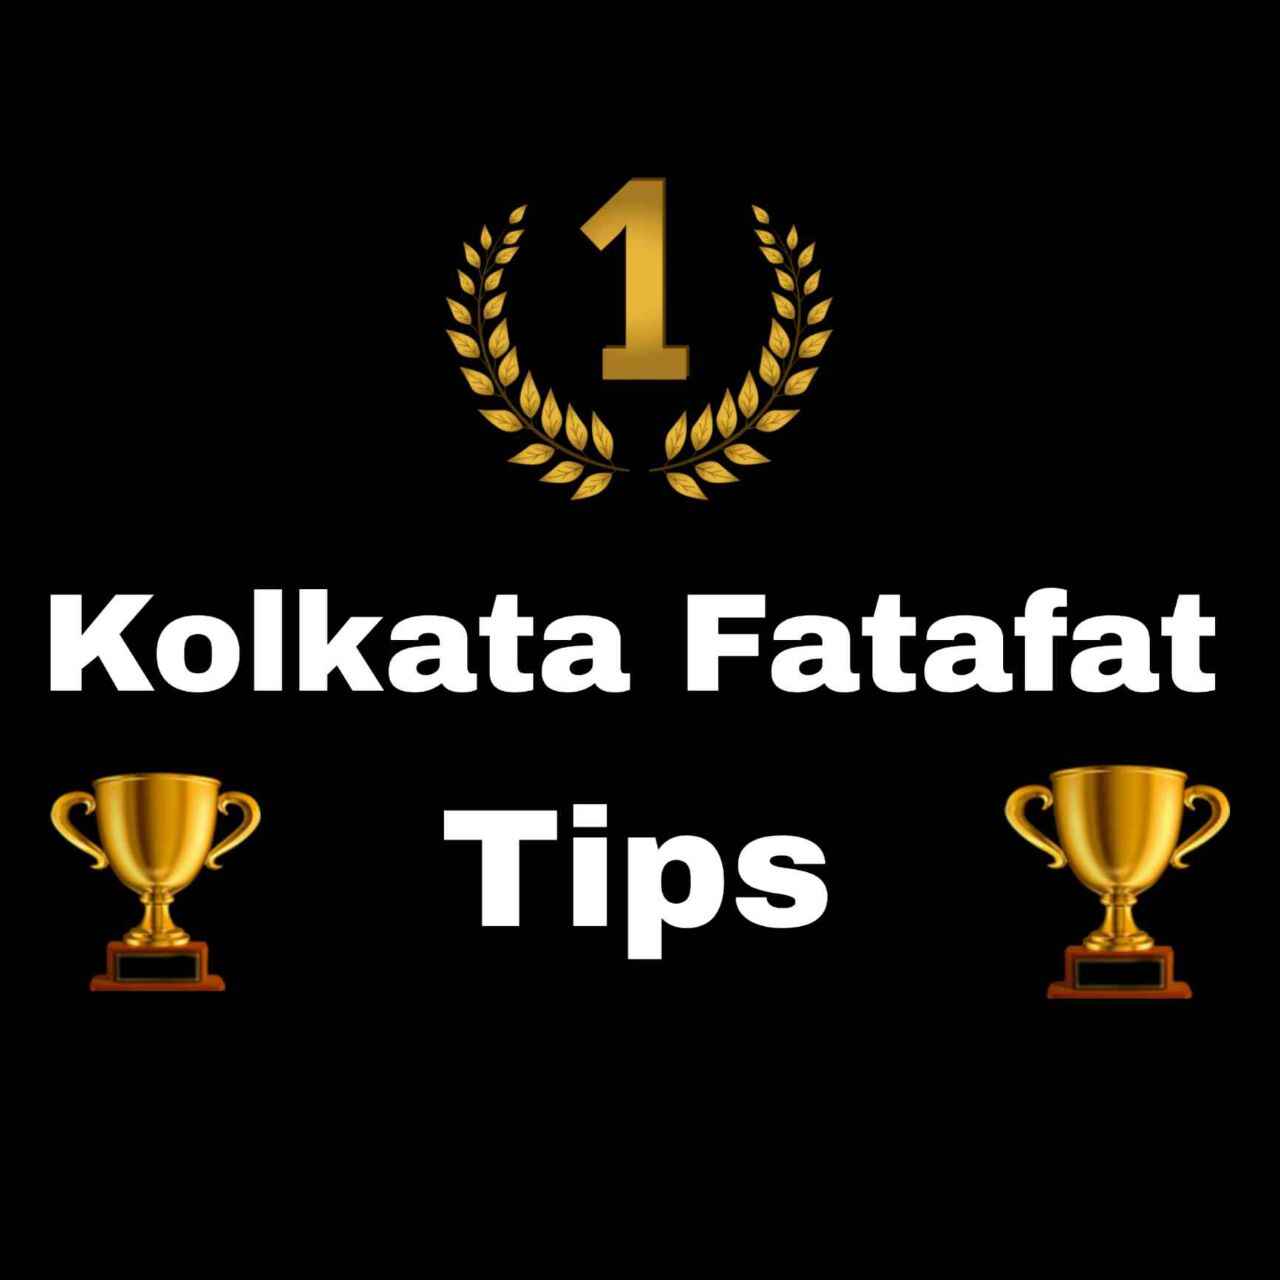 Kolkata Fatafat Tips Today